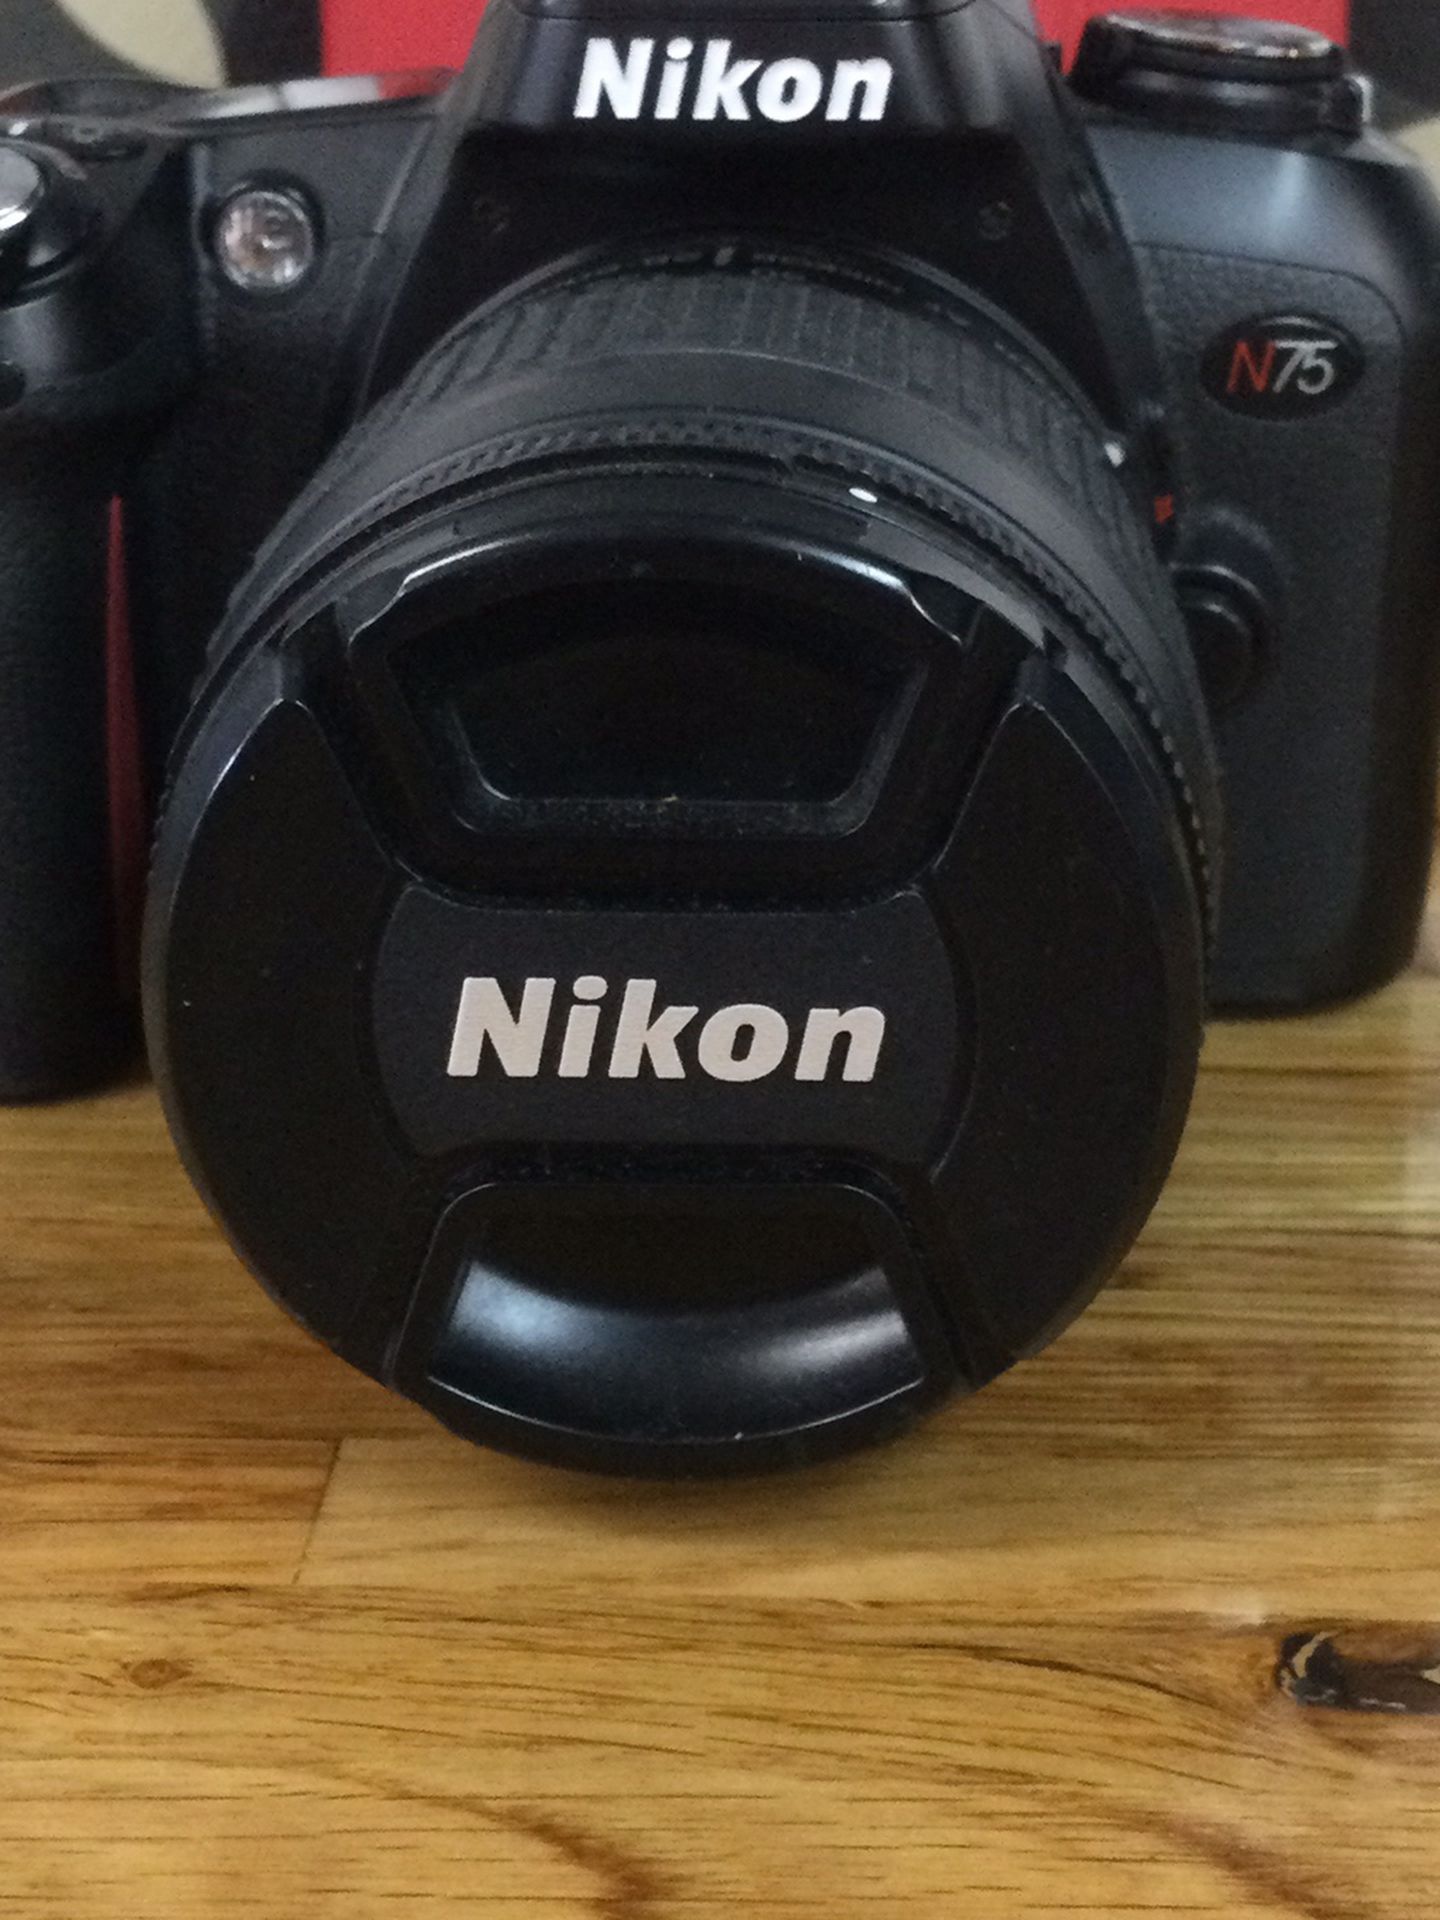 Nikon N75 Camera